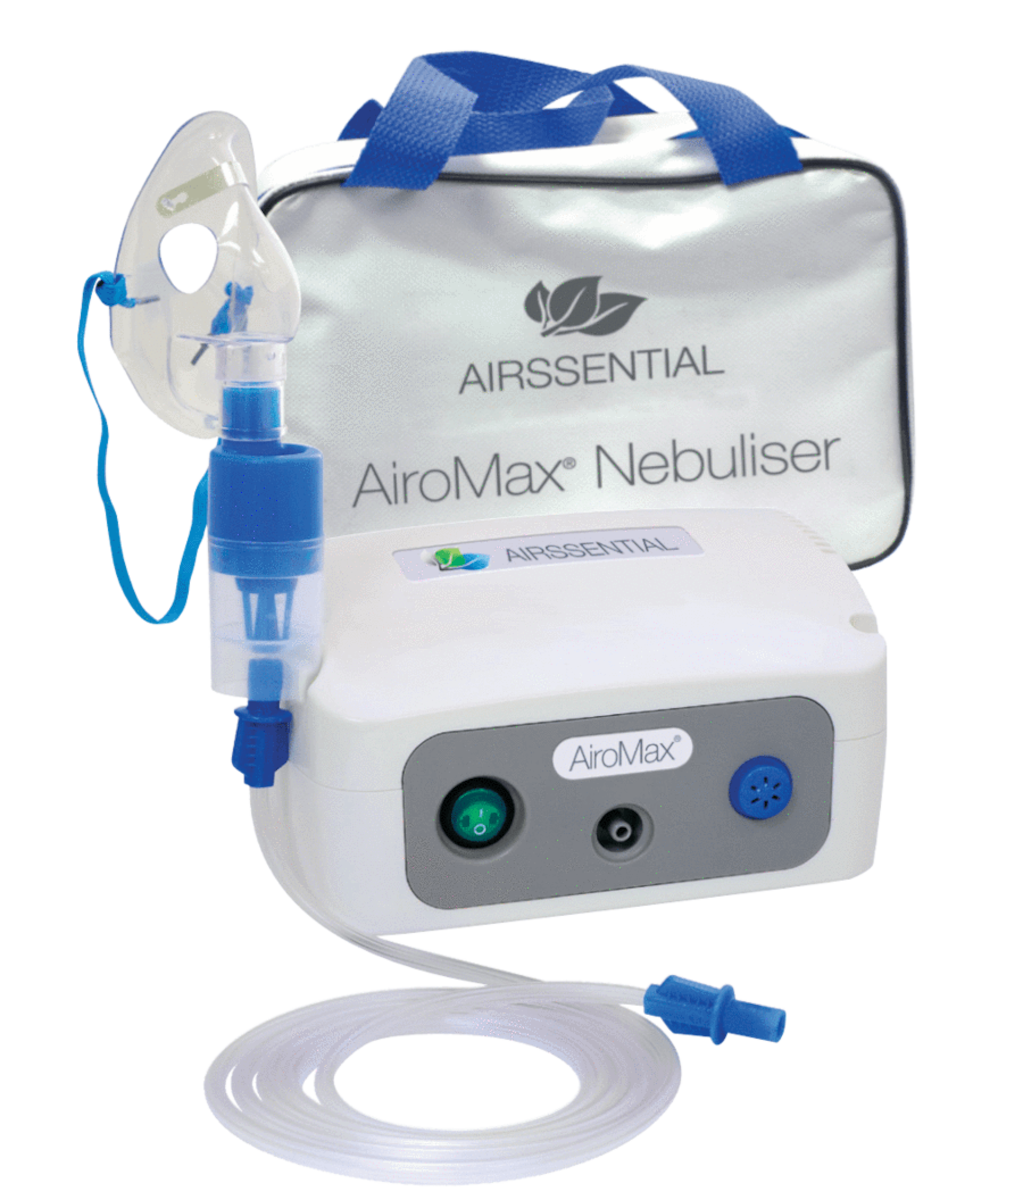 Airssential AiroMax Nebuliser